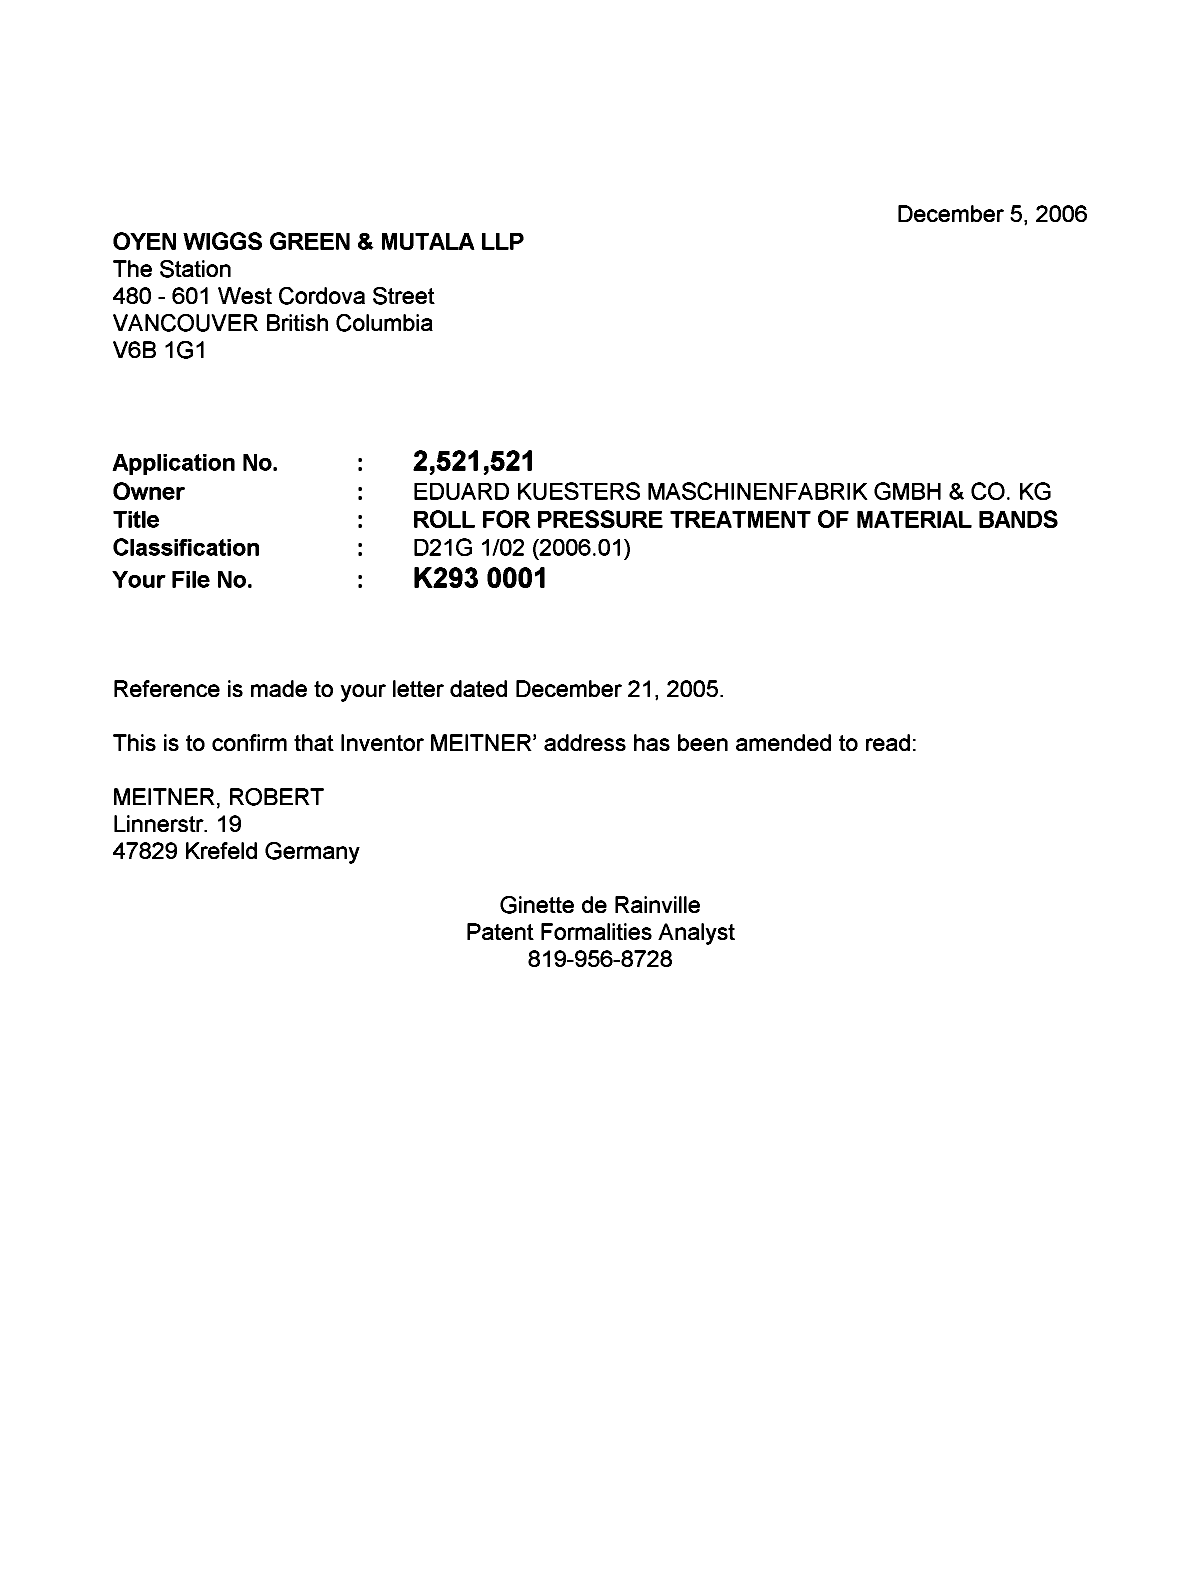 Canadian Patent Document 2521521. Correspondence 20061129. Image 1 of 1